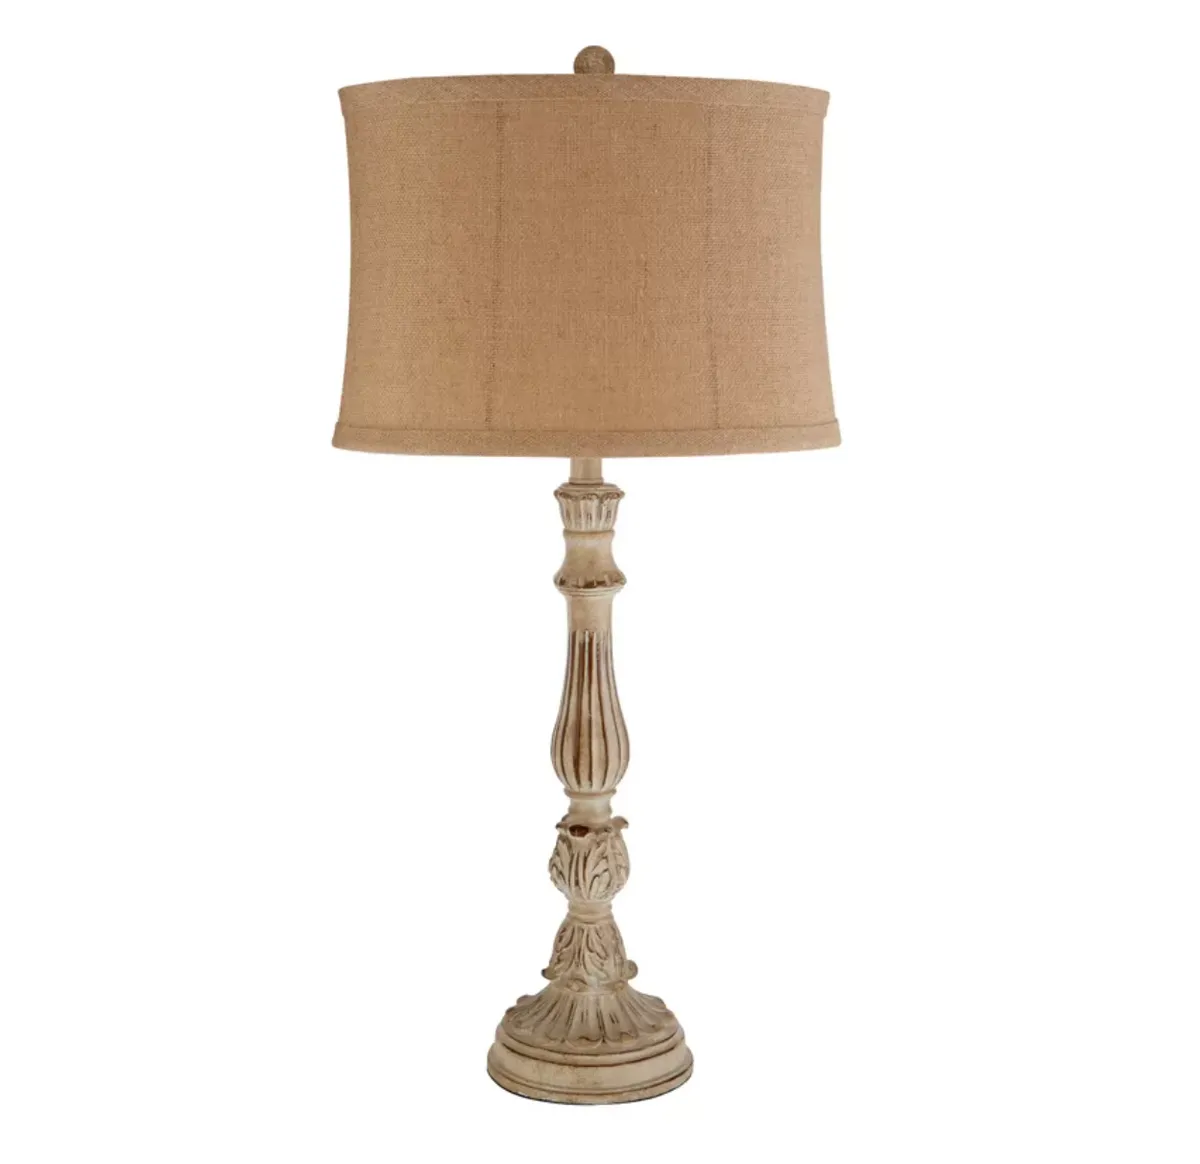 Branchview 80cm Table Lamp, Wayfair